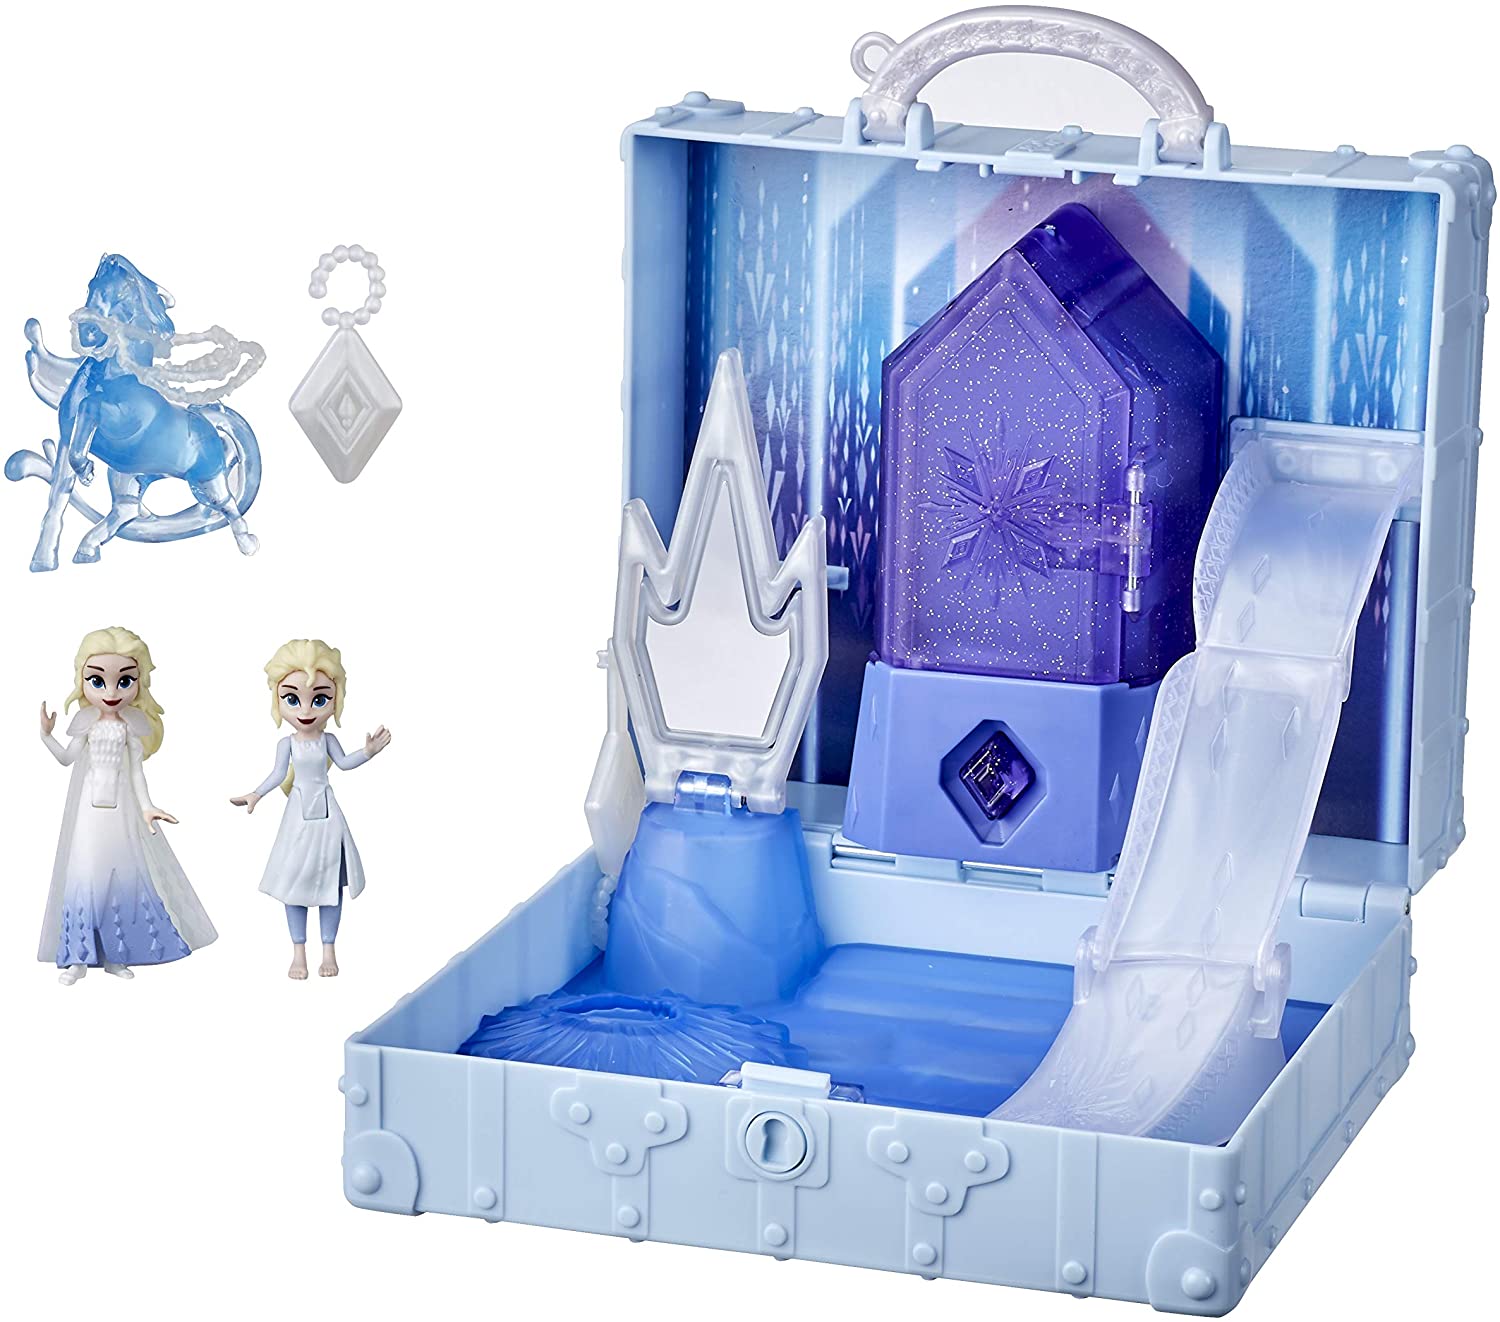 Disney's Frozen 2 Ahtohallan Adventures Pop-Up Playset $5.05 + Free Shipping w/ Amazon Prime or Orders $25+